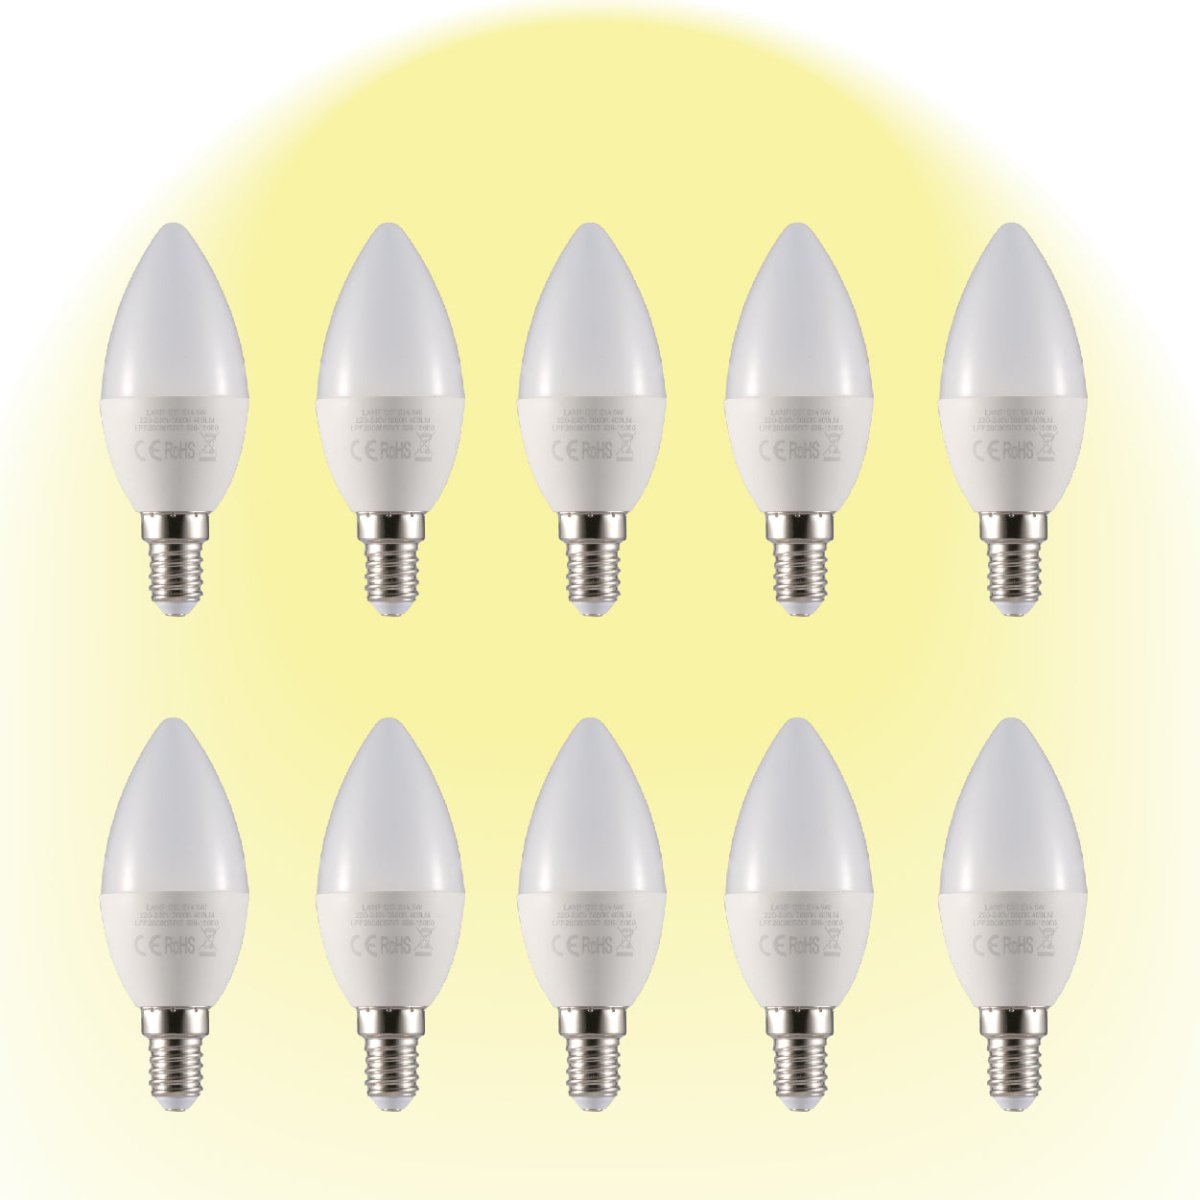 Vela LED Candle Bulb C37 E14 Small Edison Screw 5W pack of 10 warm white